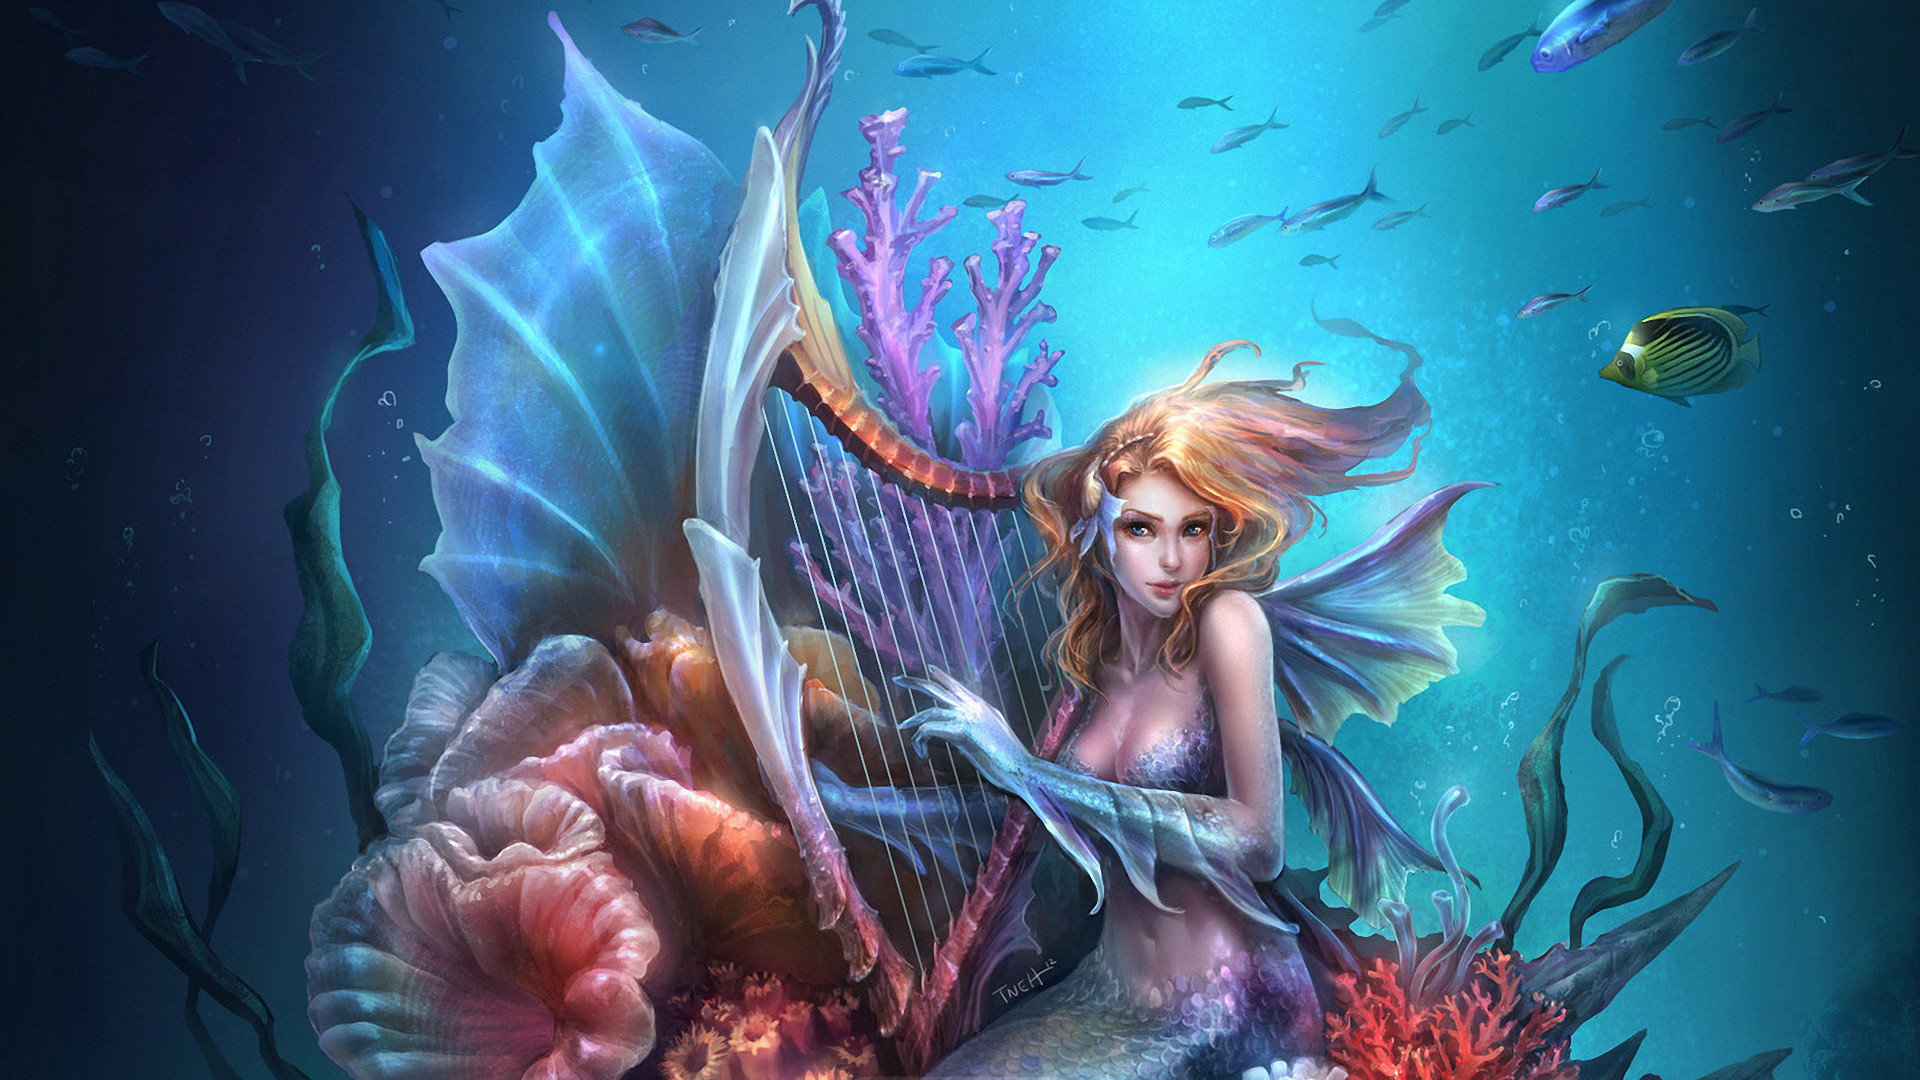 1920x1080 Fantasy mermaid art wallpaper |  | 29103 | WallpaperUP